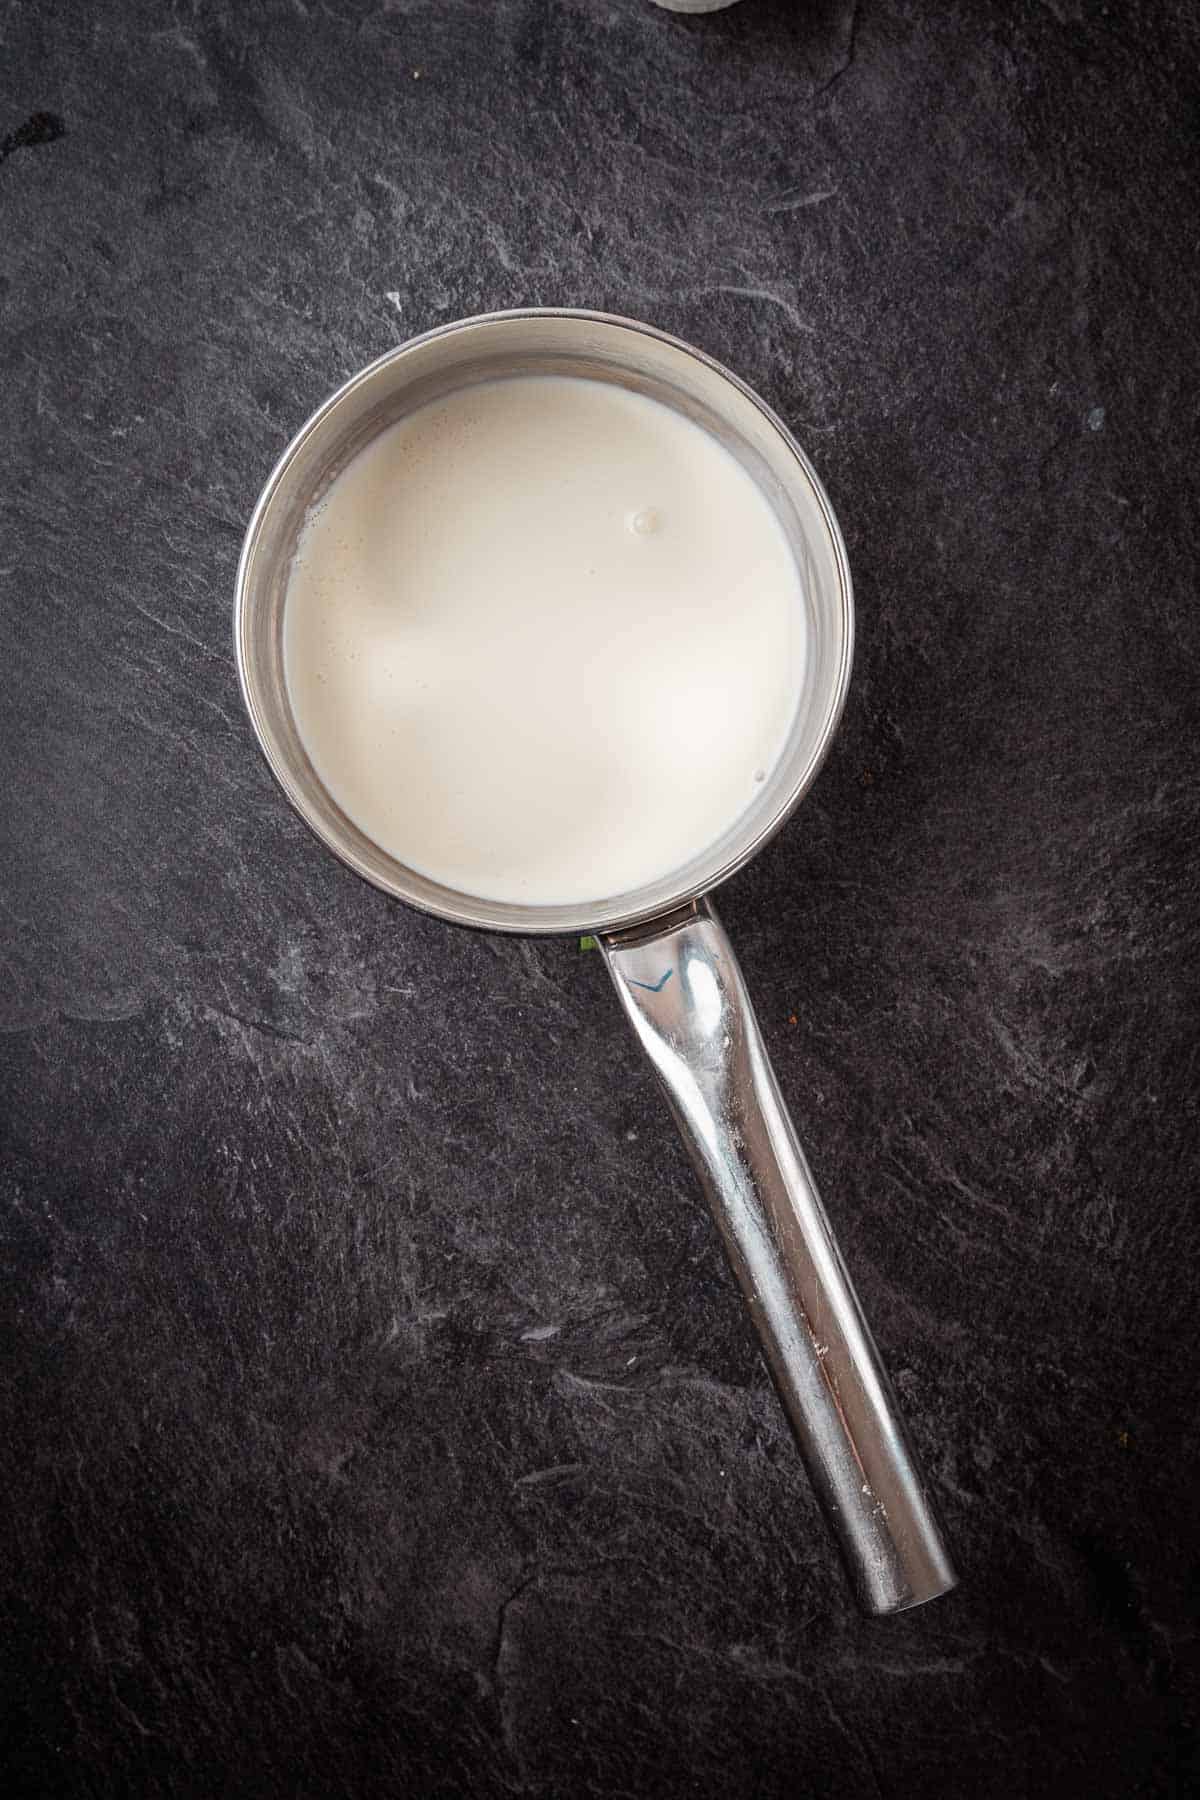 Milk in a metal pan on a dark surface.